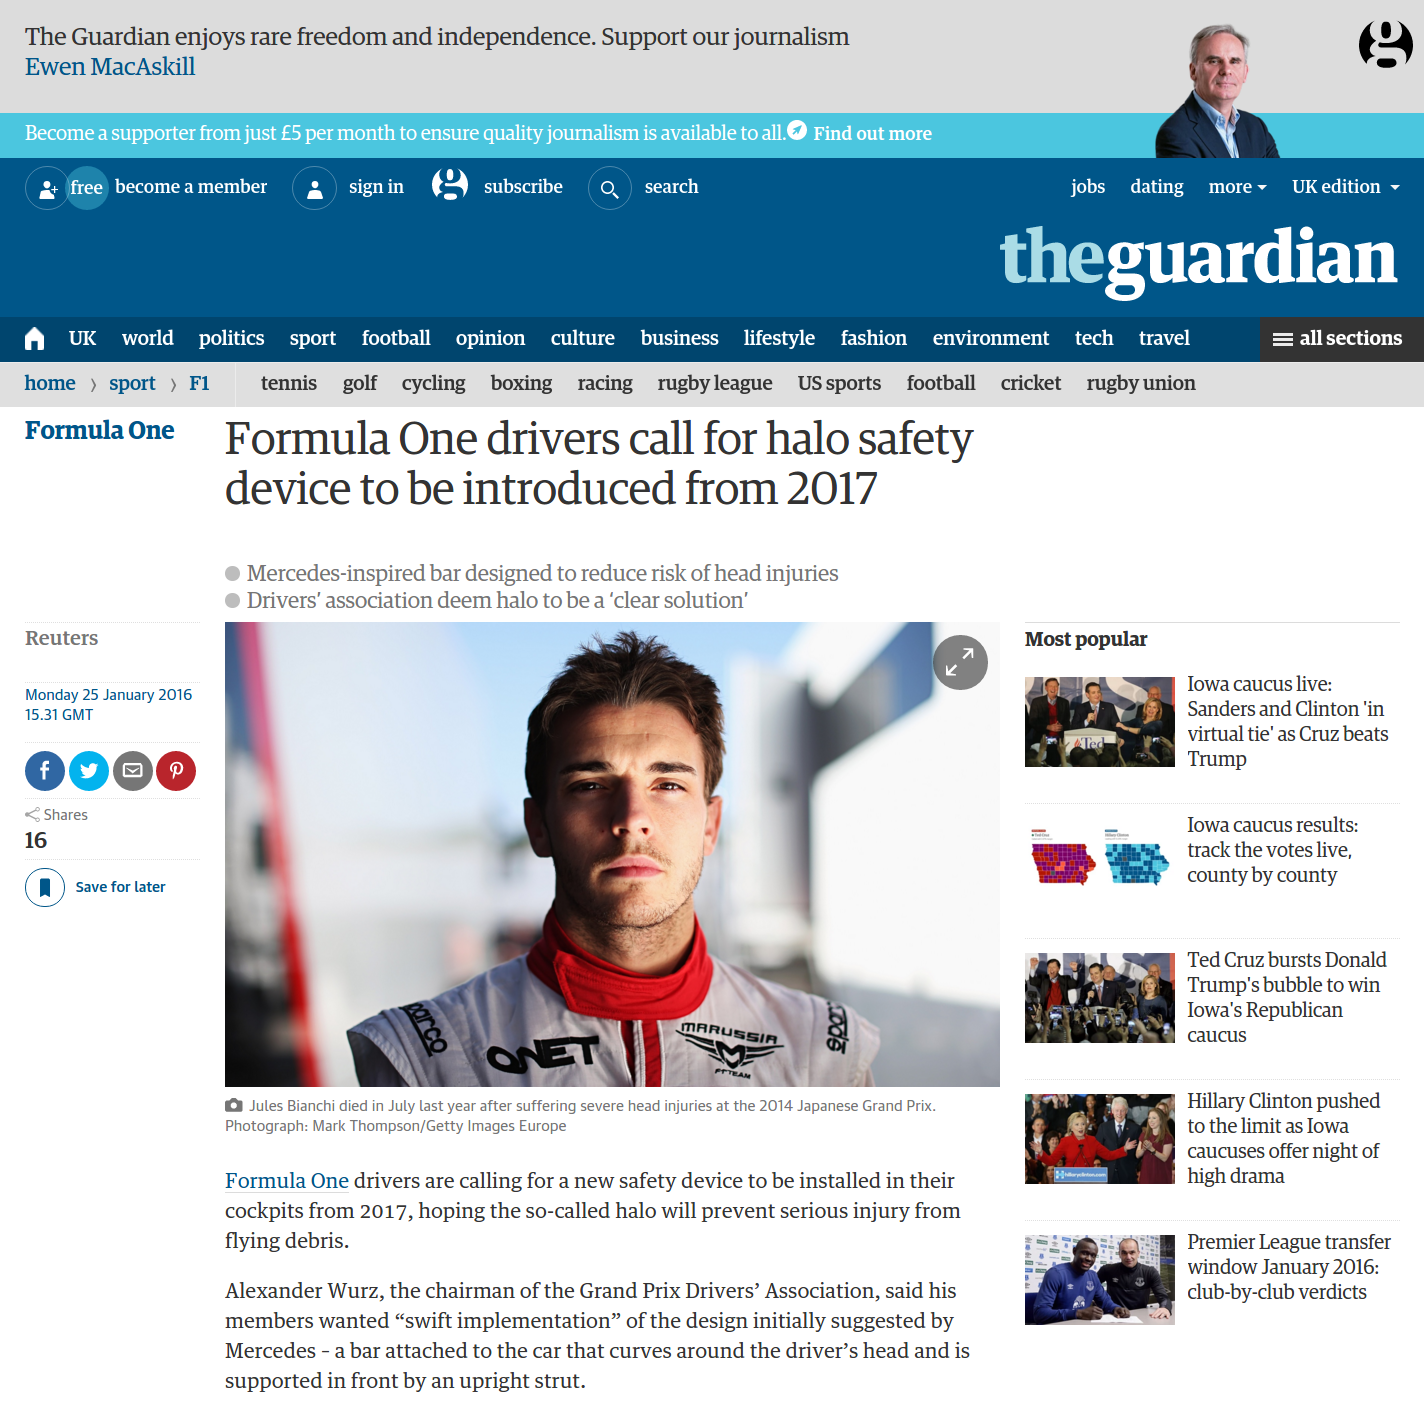 The Guardian website uses AngularJS